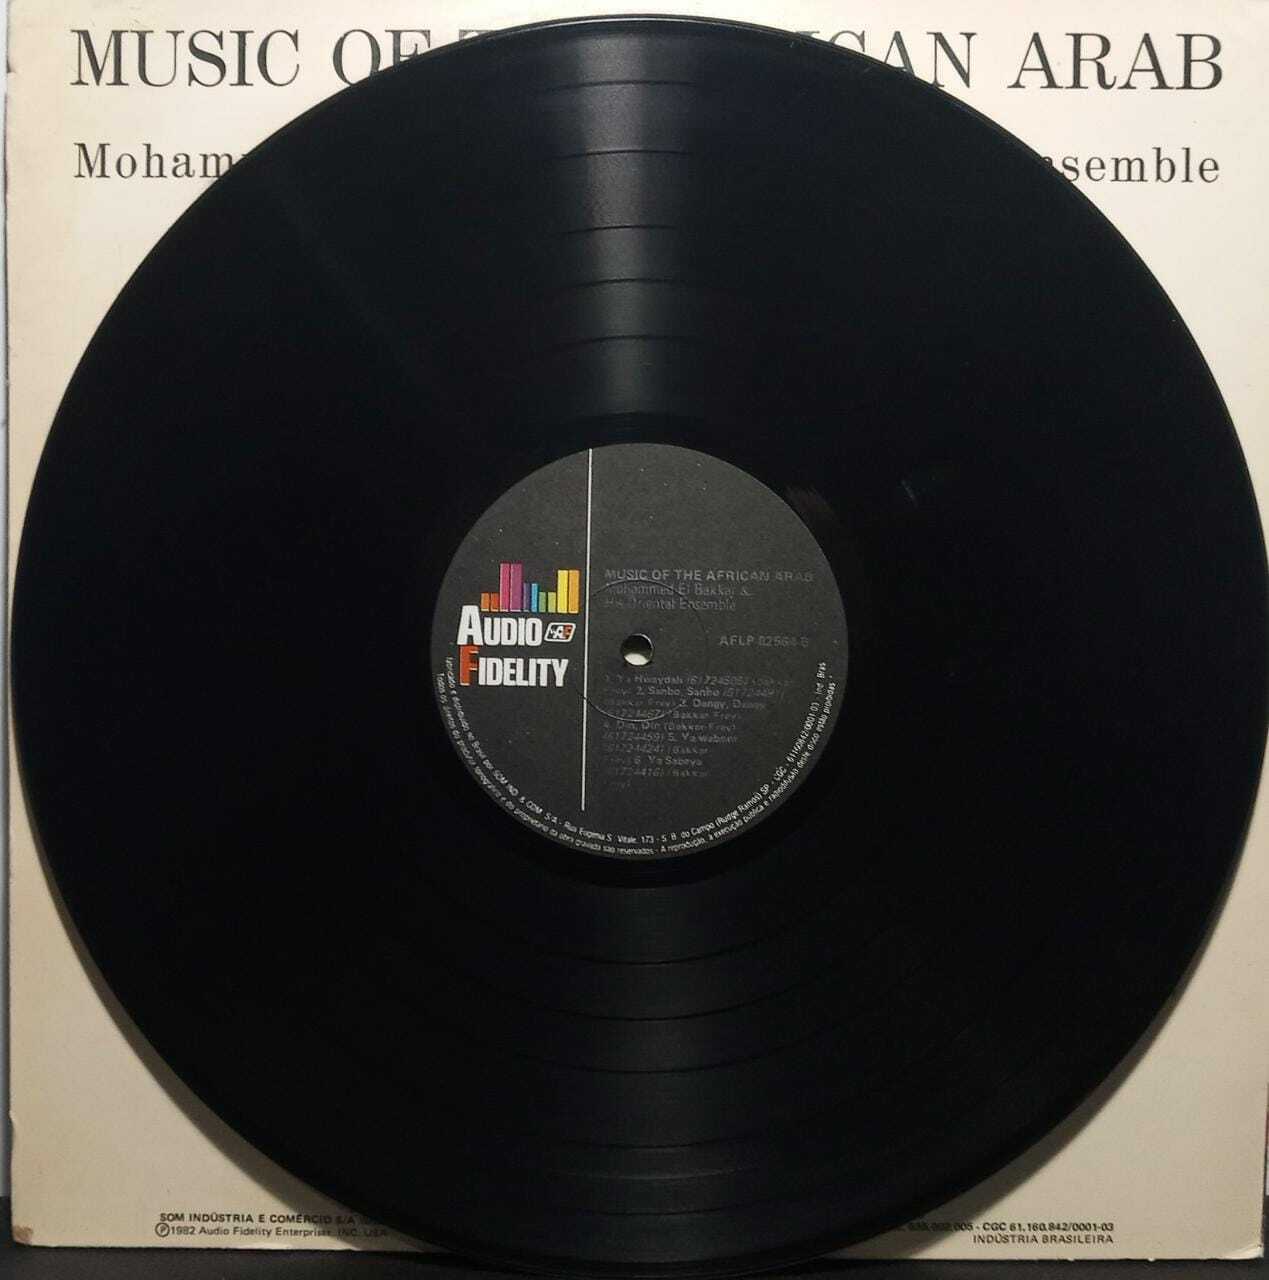 Vinil - Mohammed El-Bakkar & His Oriental Ensemble - Music Of The African Arab Vol. 3